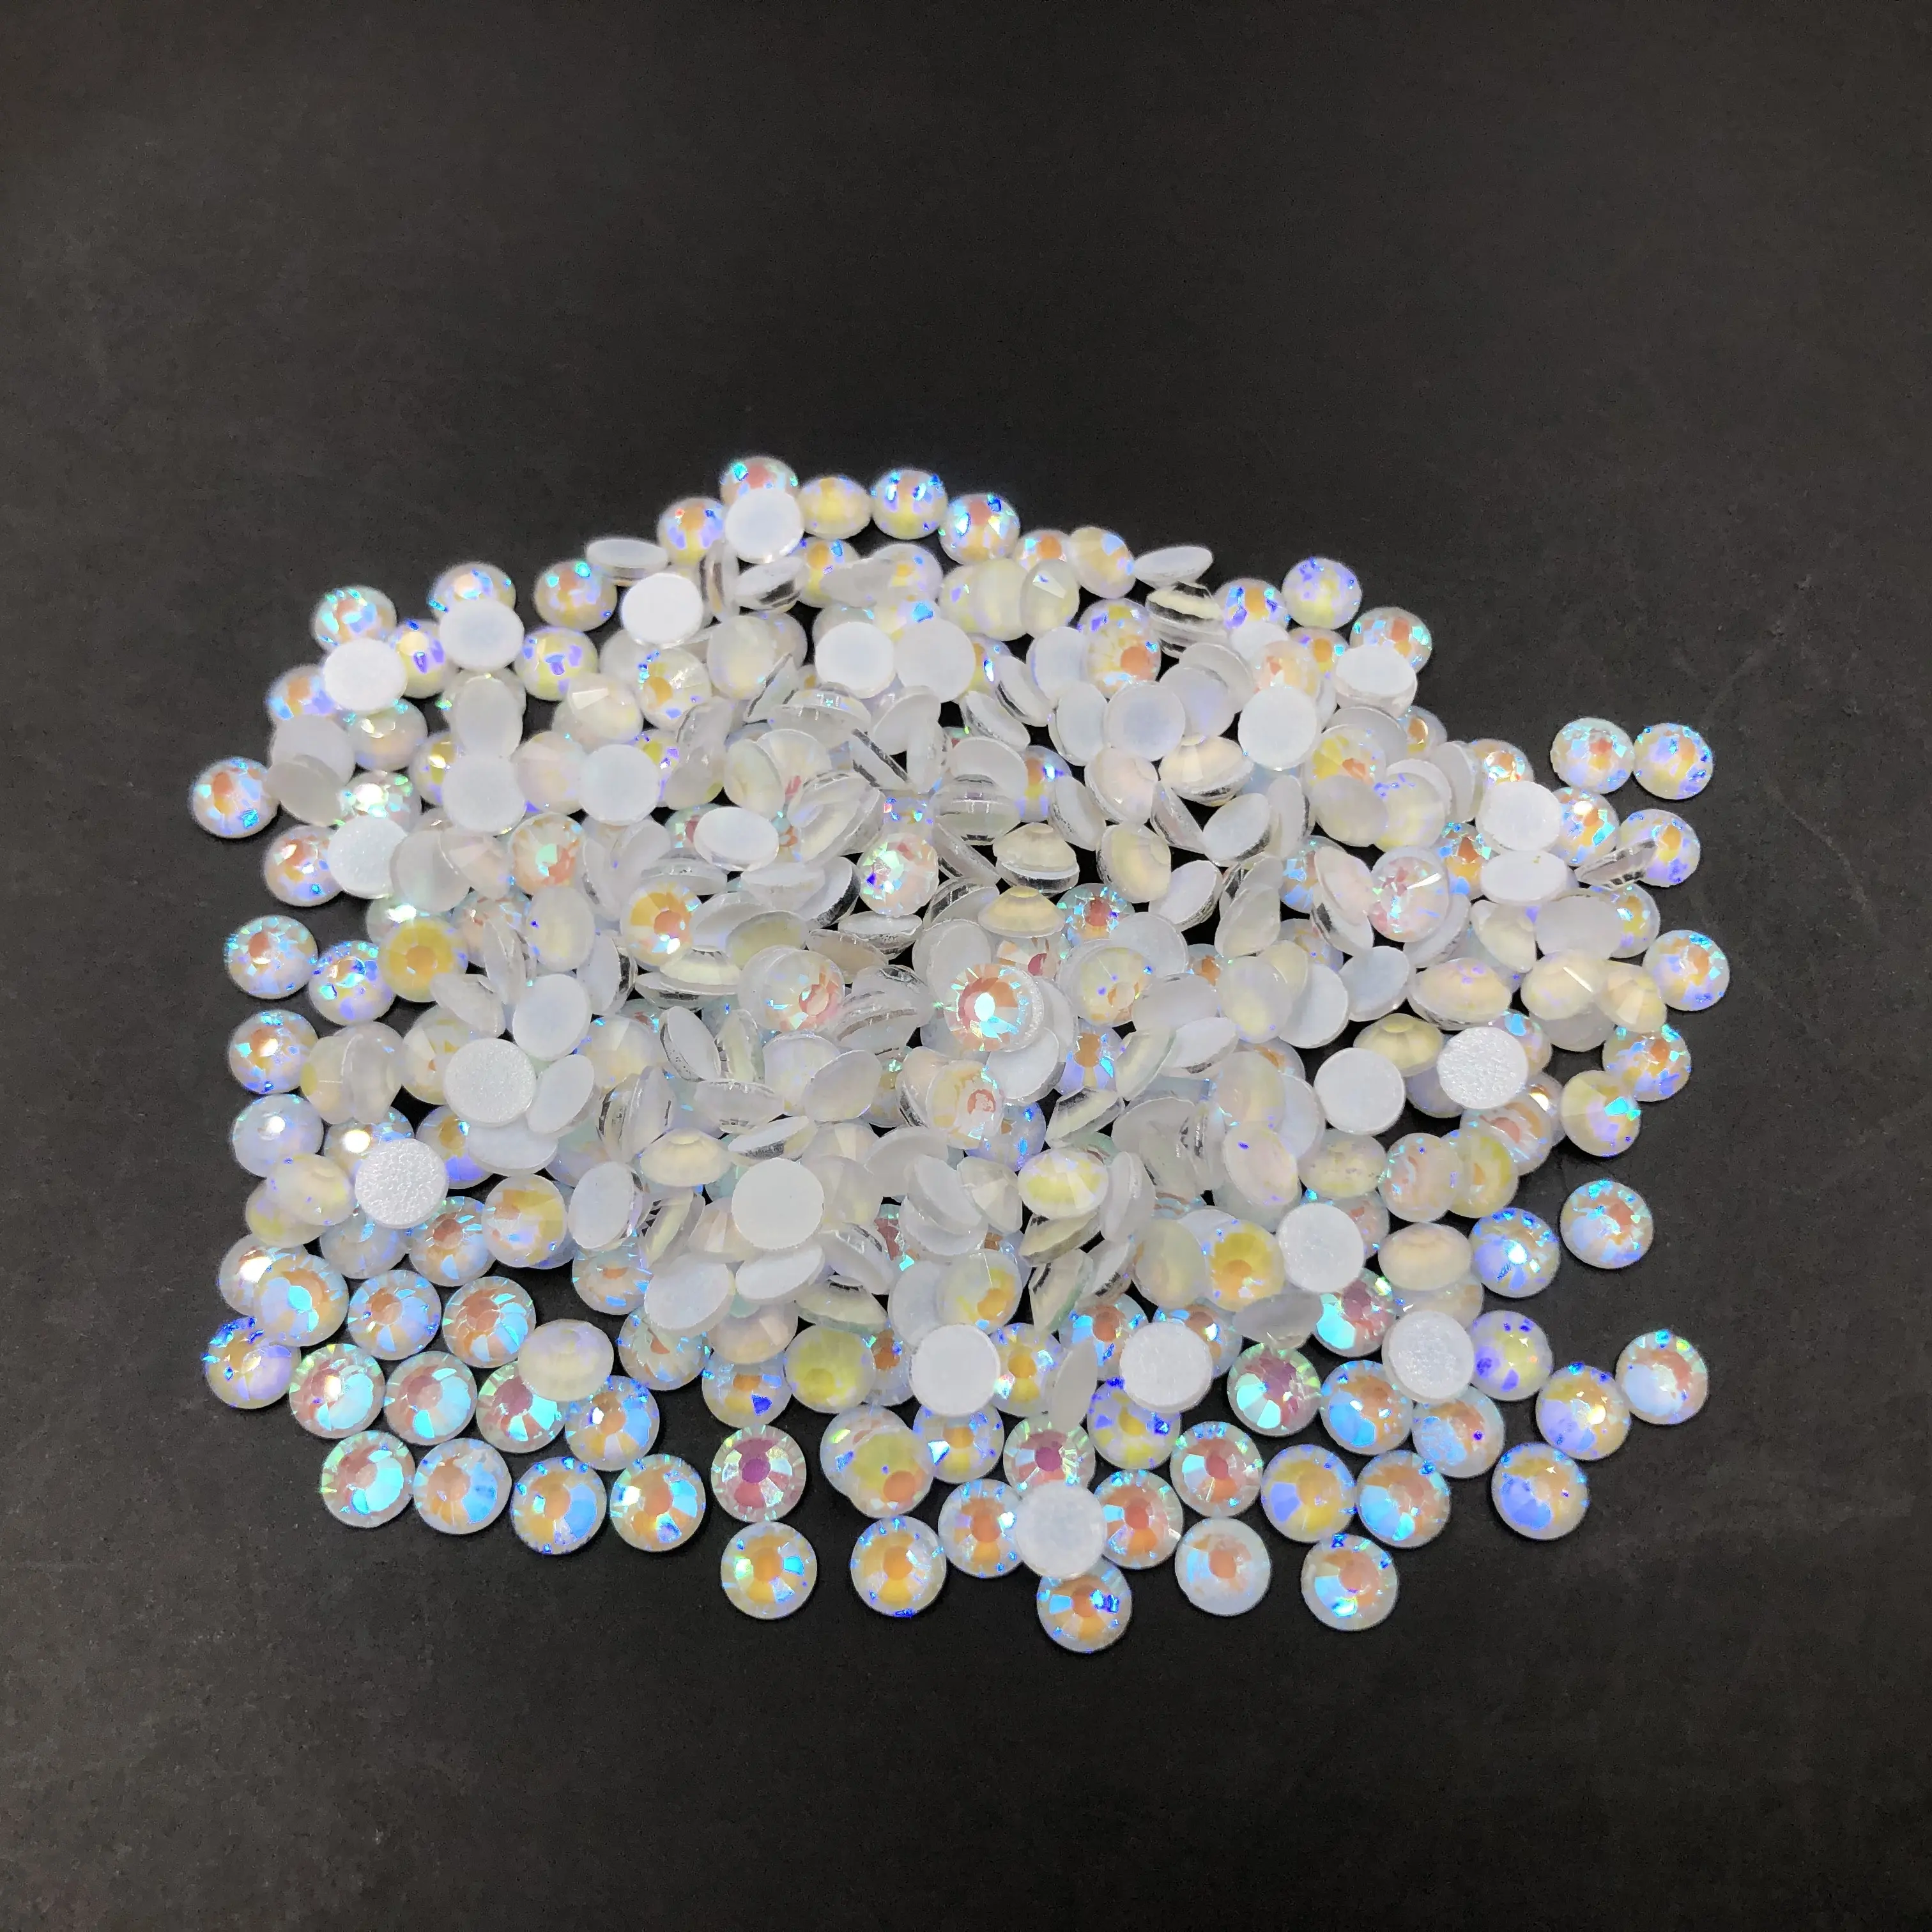 2mm 3mm 4mm 5mm 6mm Jelly White AB Crystal Stones Round Flatback Rhinestone For DIY Crafts neon rhinestones